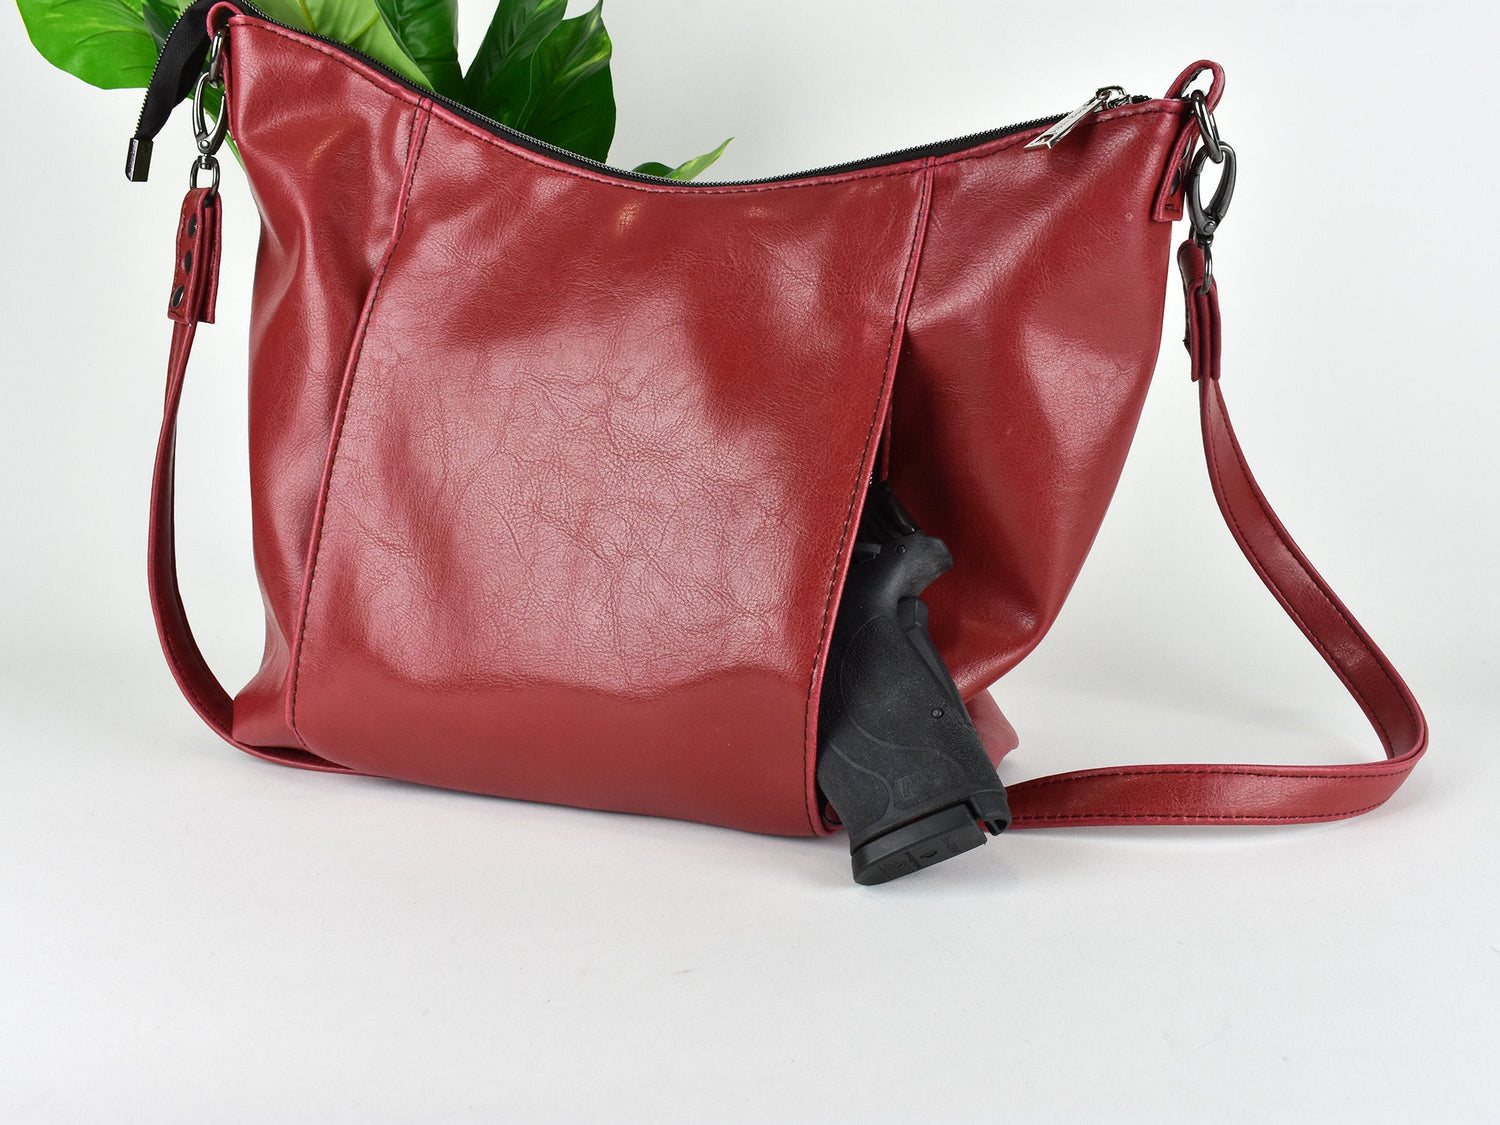 Vegan Leather Concealed Carry Purse - Gun Handbags